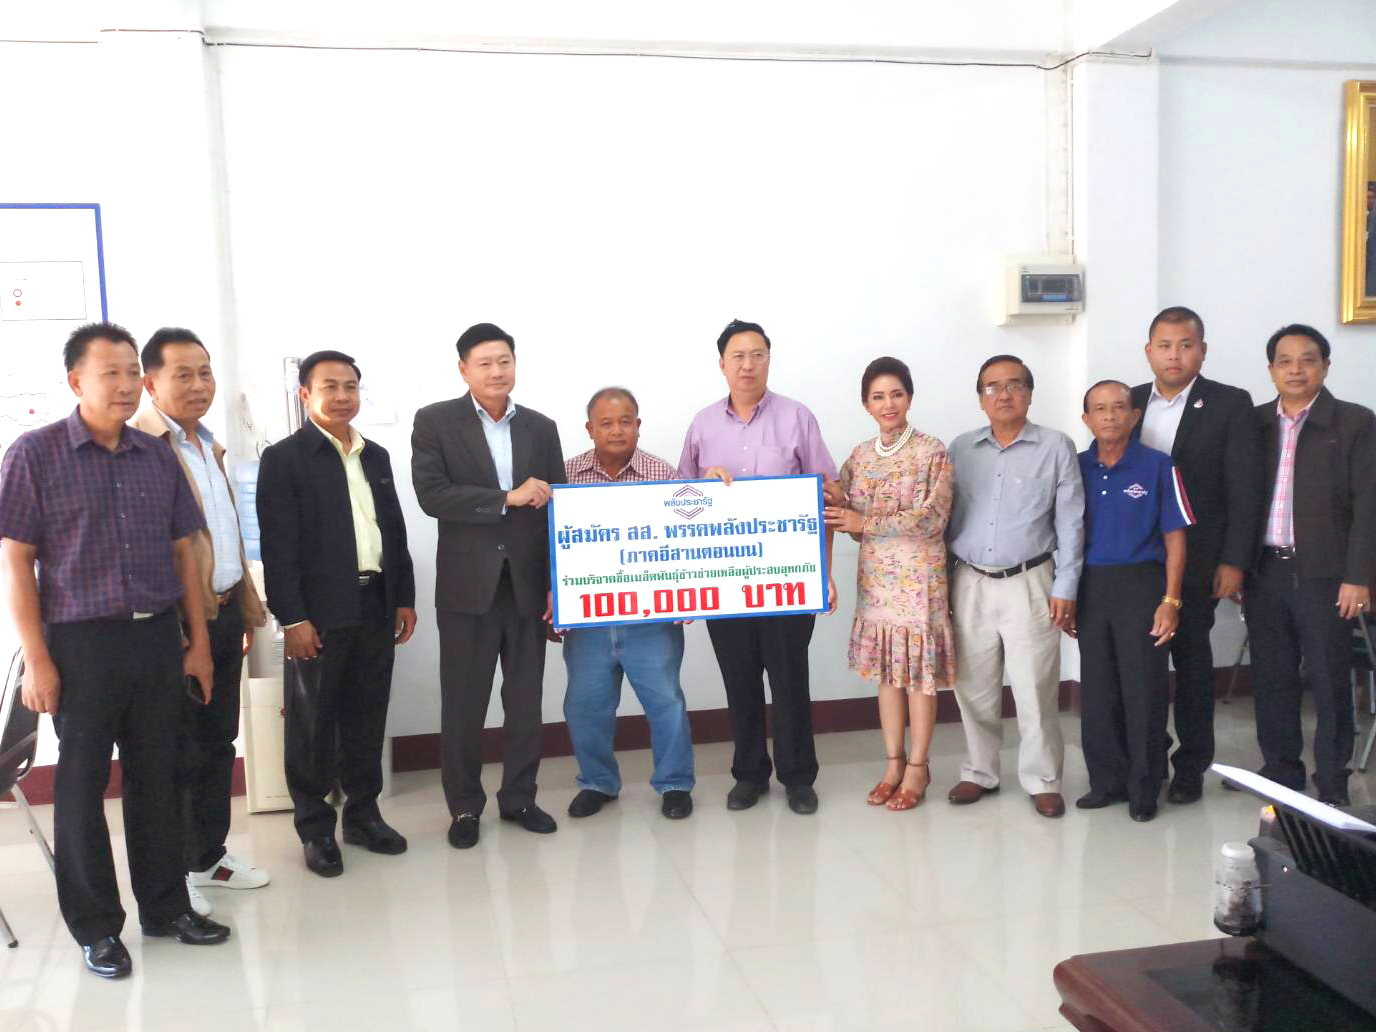 5 October 2019, at the Sakon Nakhon Sugarcane Planters Association